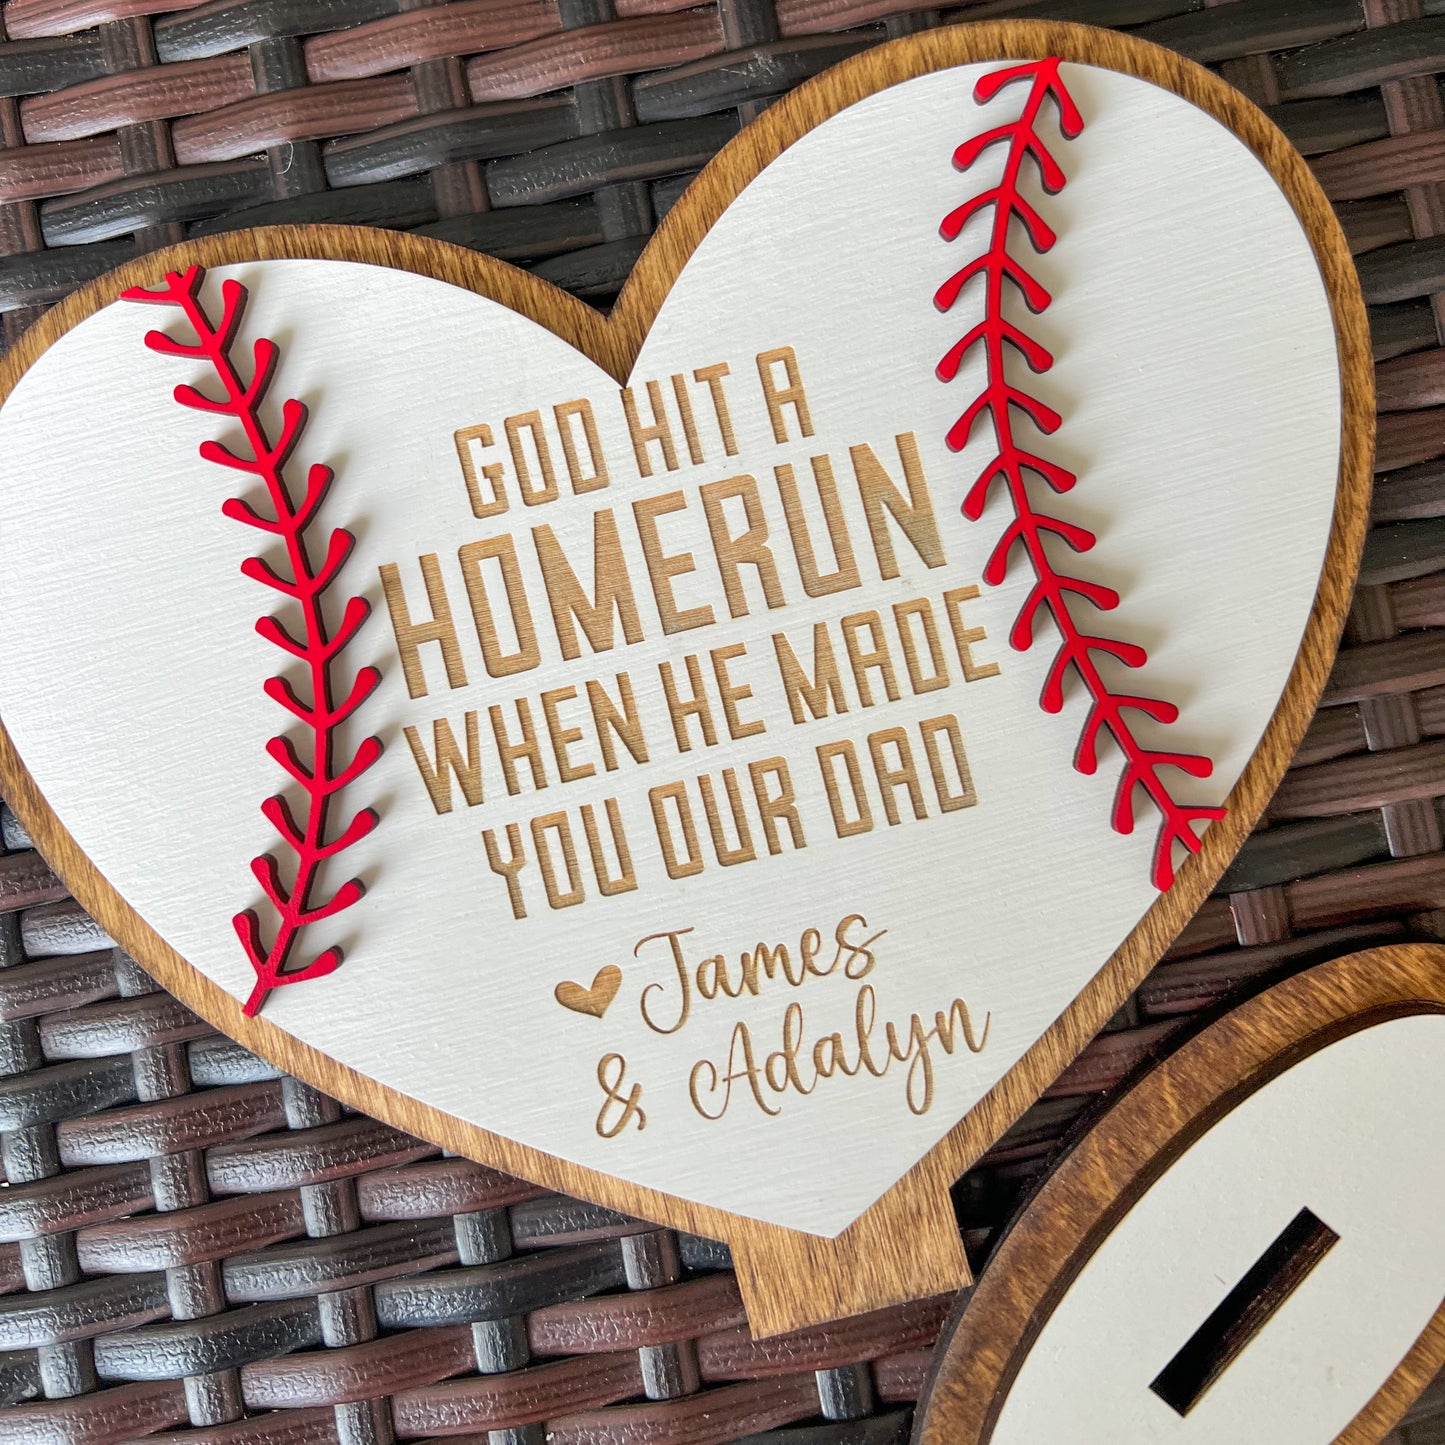 Baseball Heart Plaque